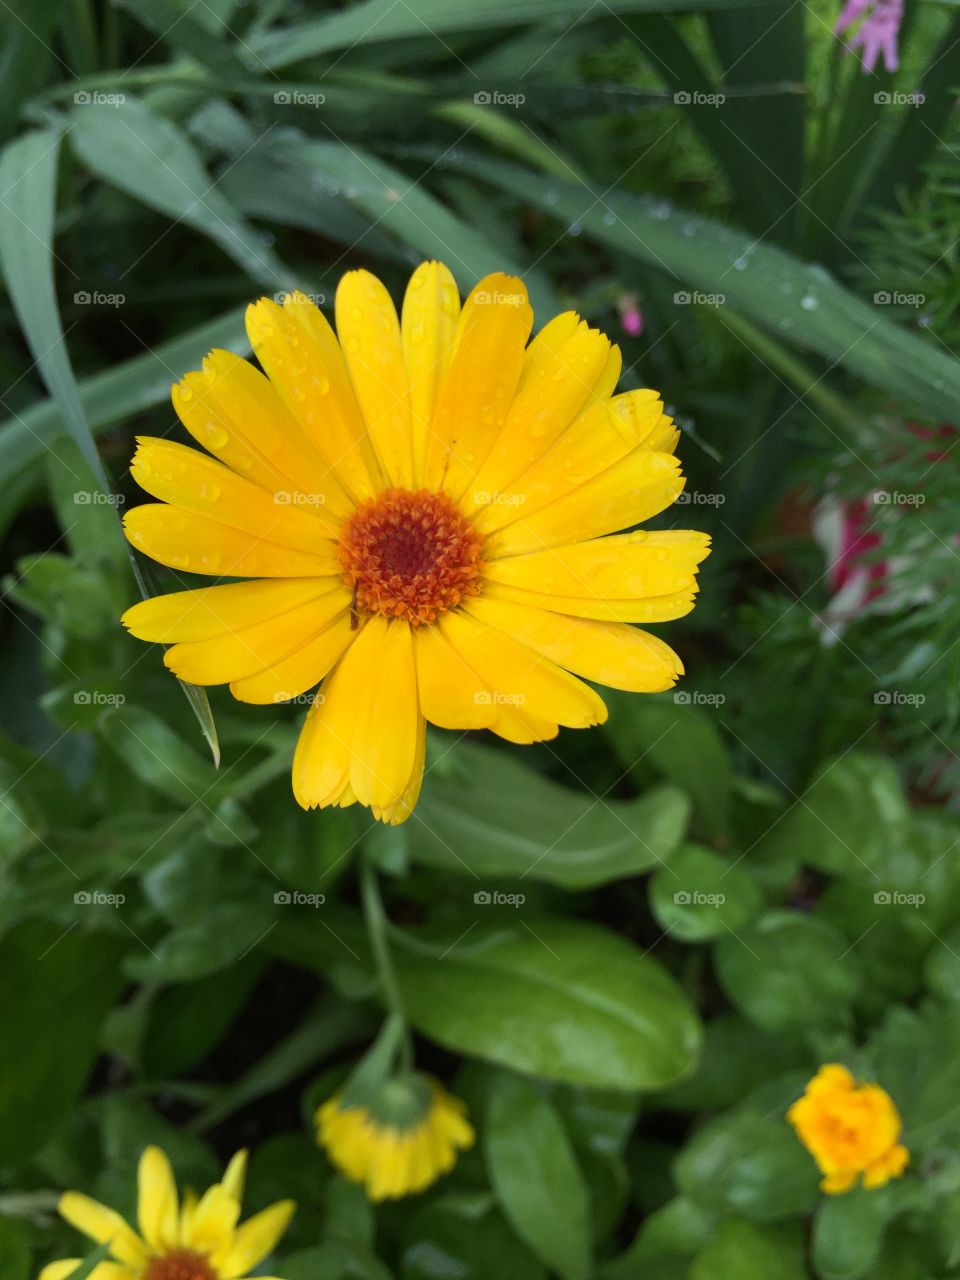 Bright yellow flower. Mount Vernon, VA.